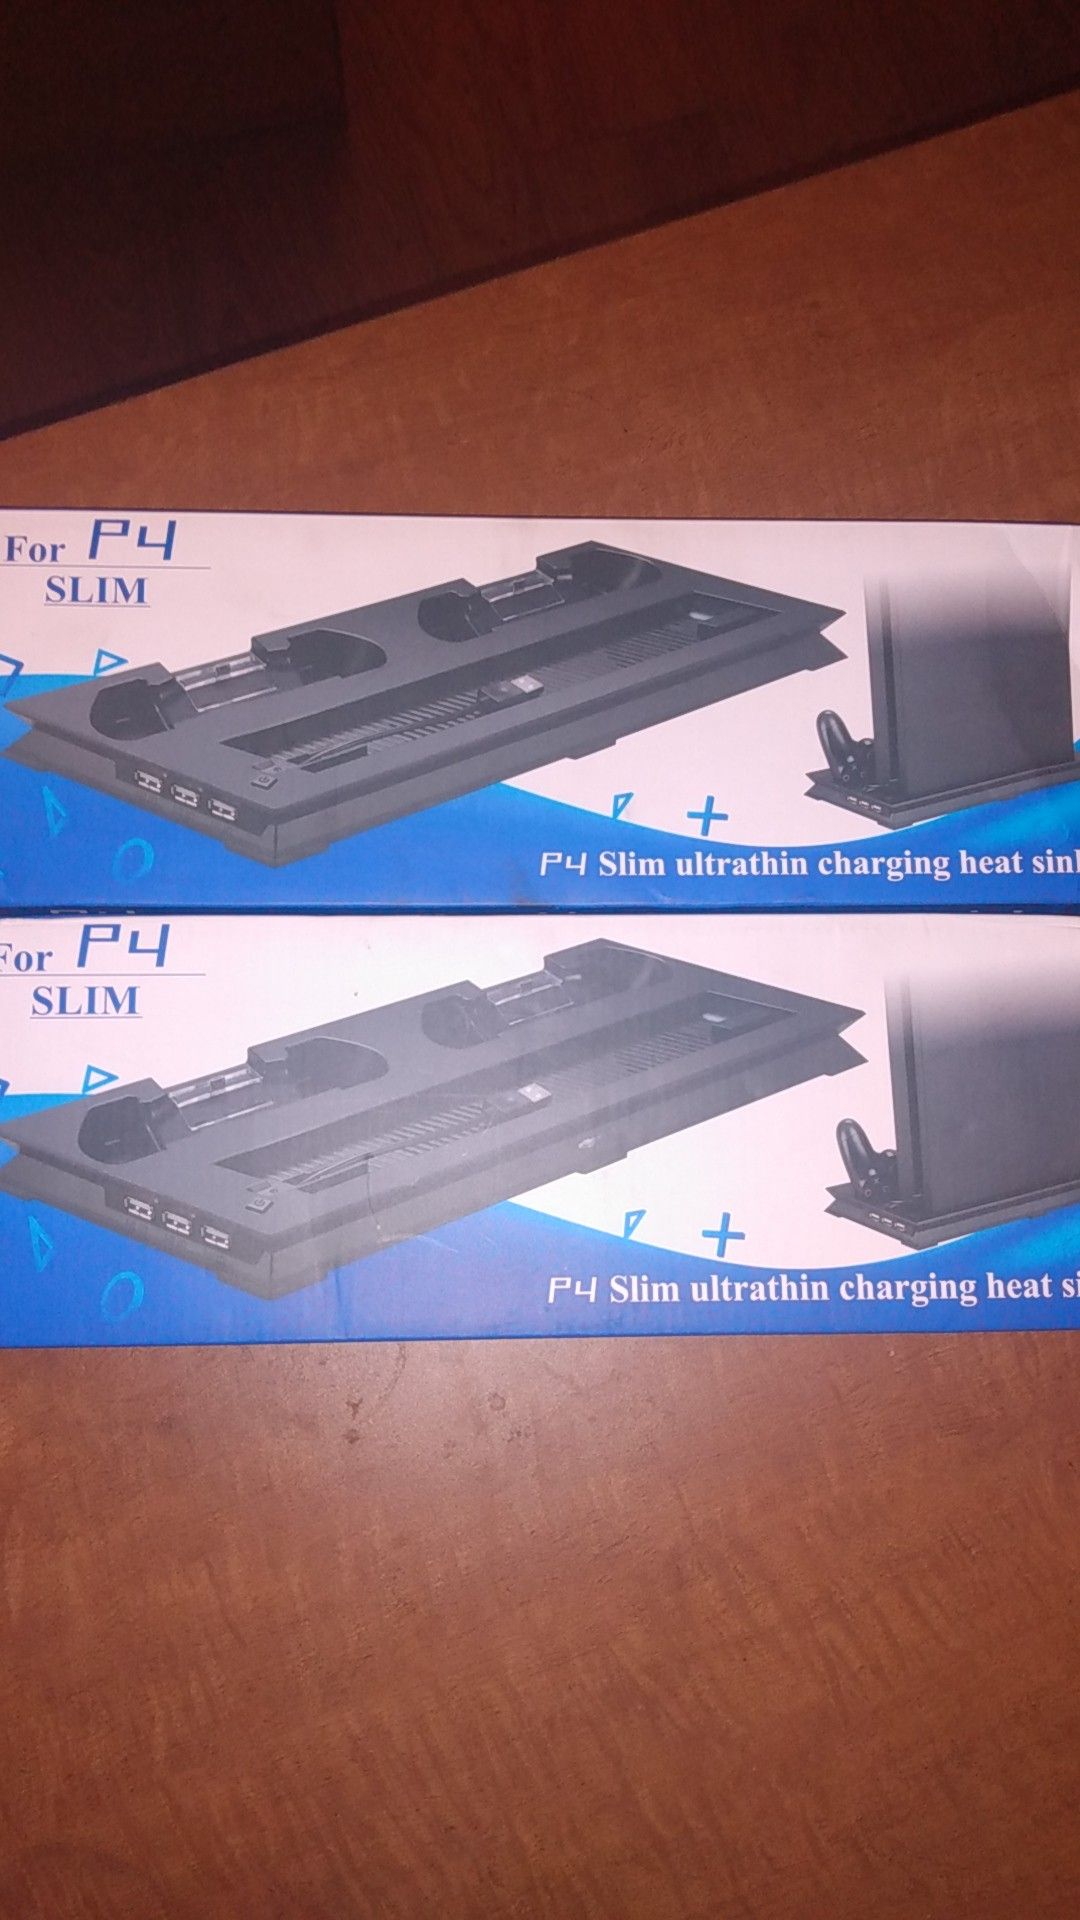 P4 Slim Ultrathin charging heat sink